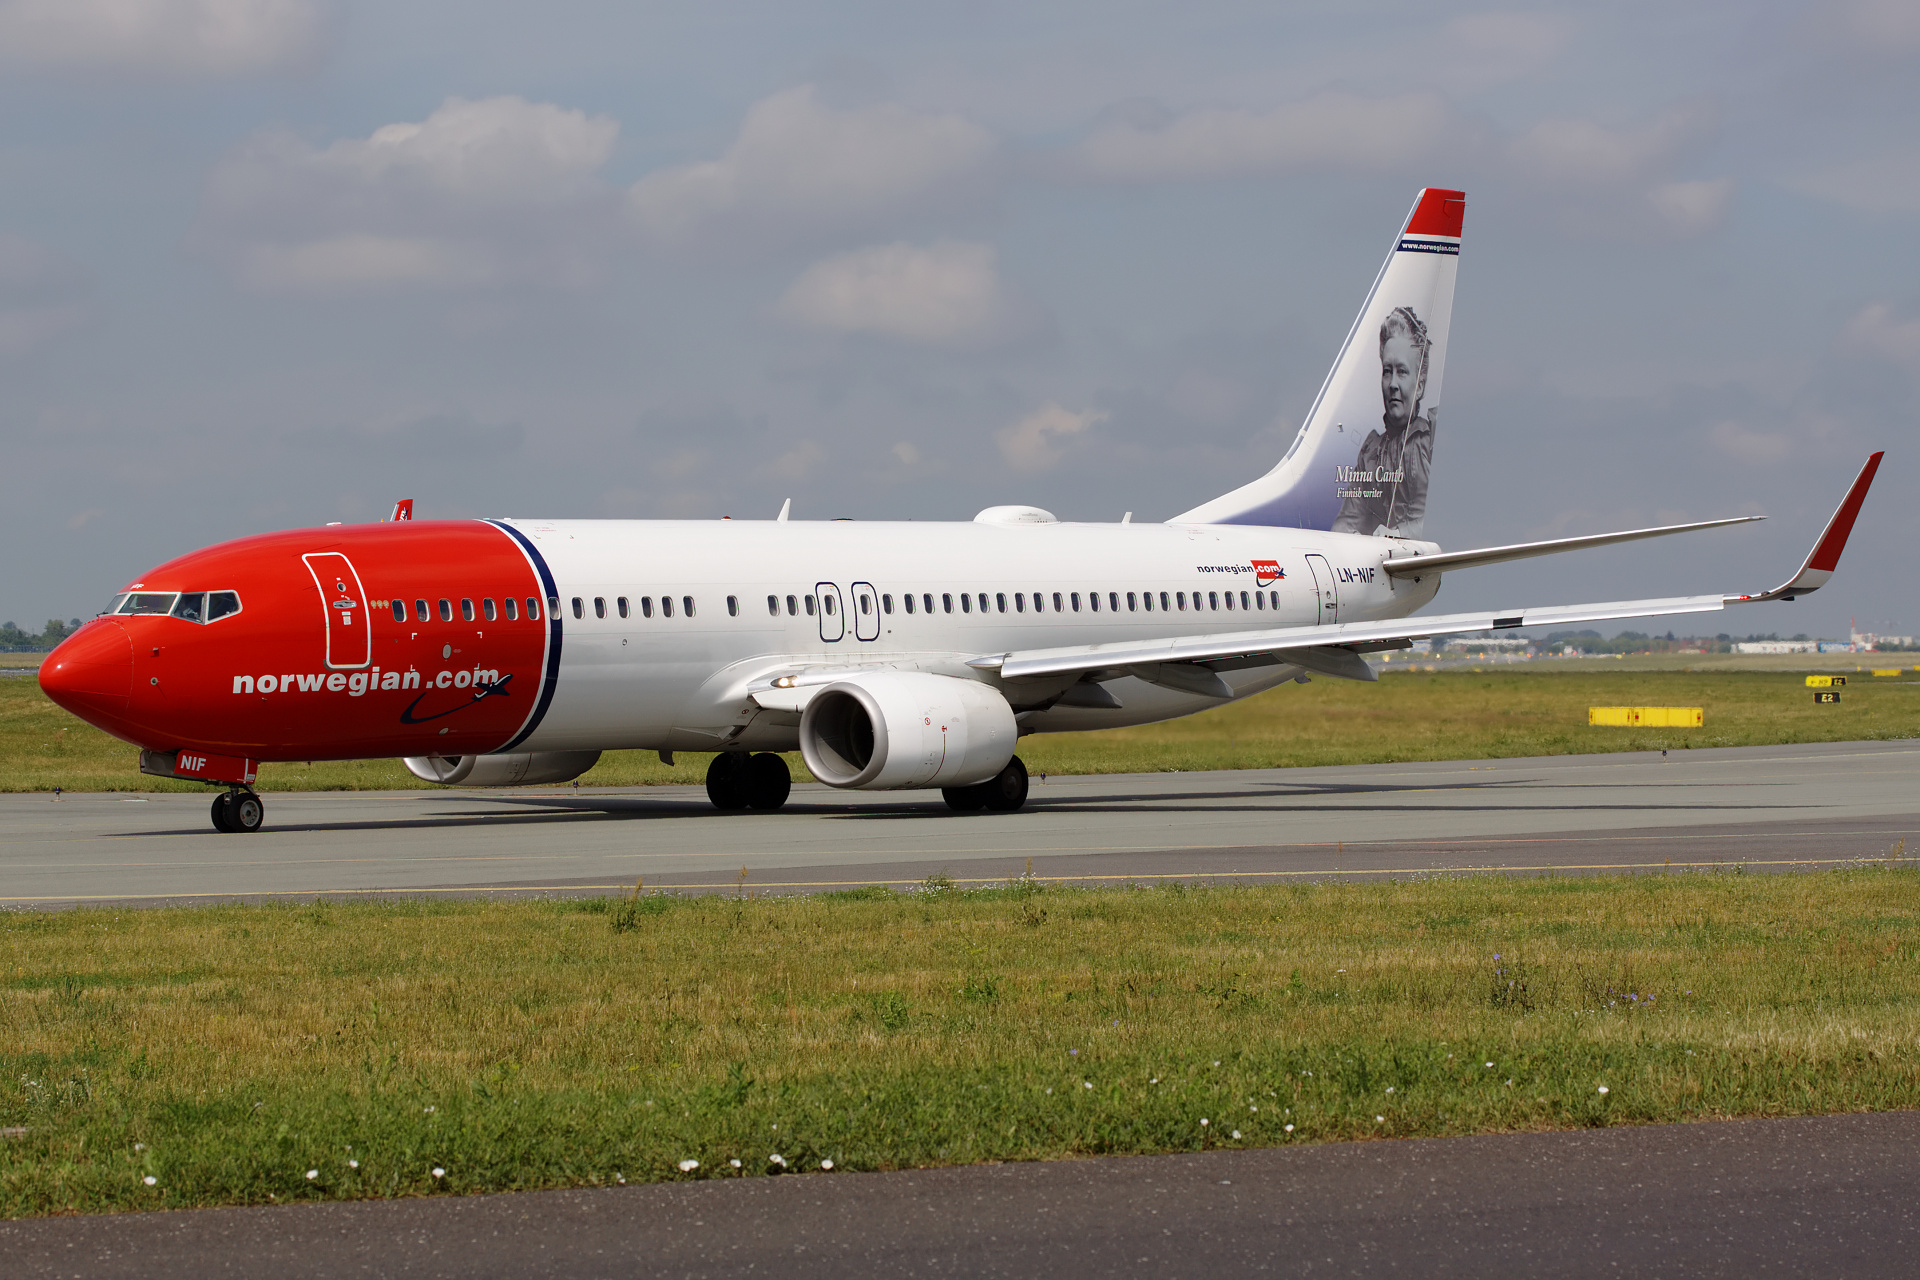 LN-NIF, Norwegian Air Shuttle (Aircraft » EPWA Spotting » Boeing 737-800 » Norwegian Air)